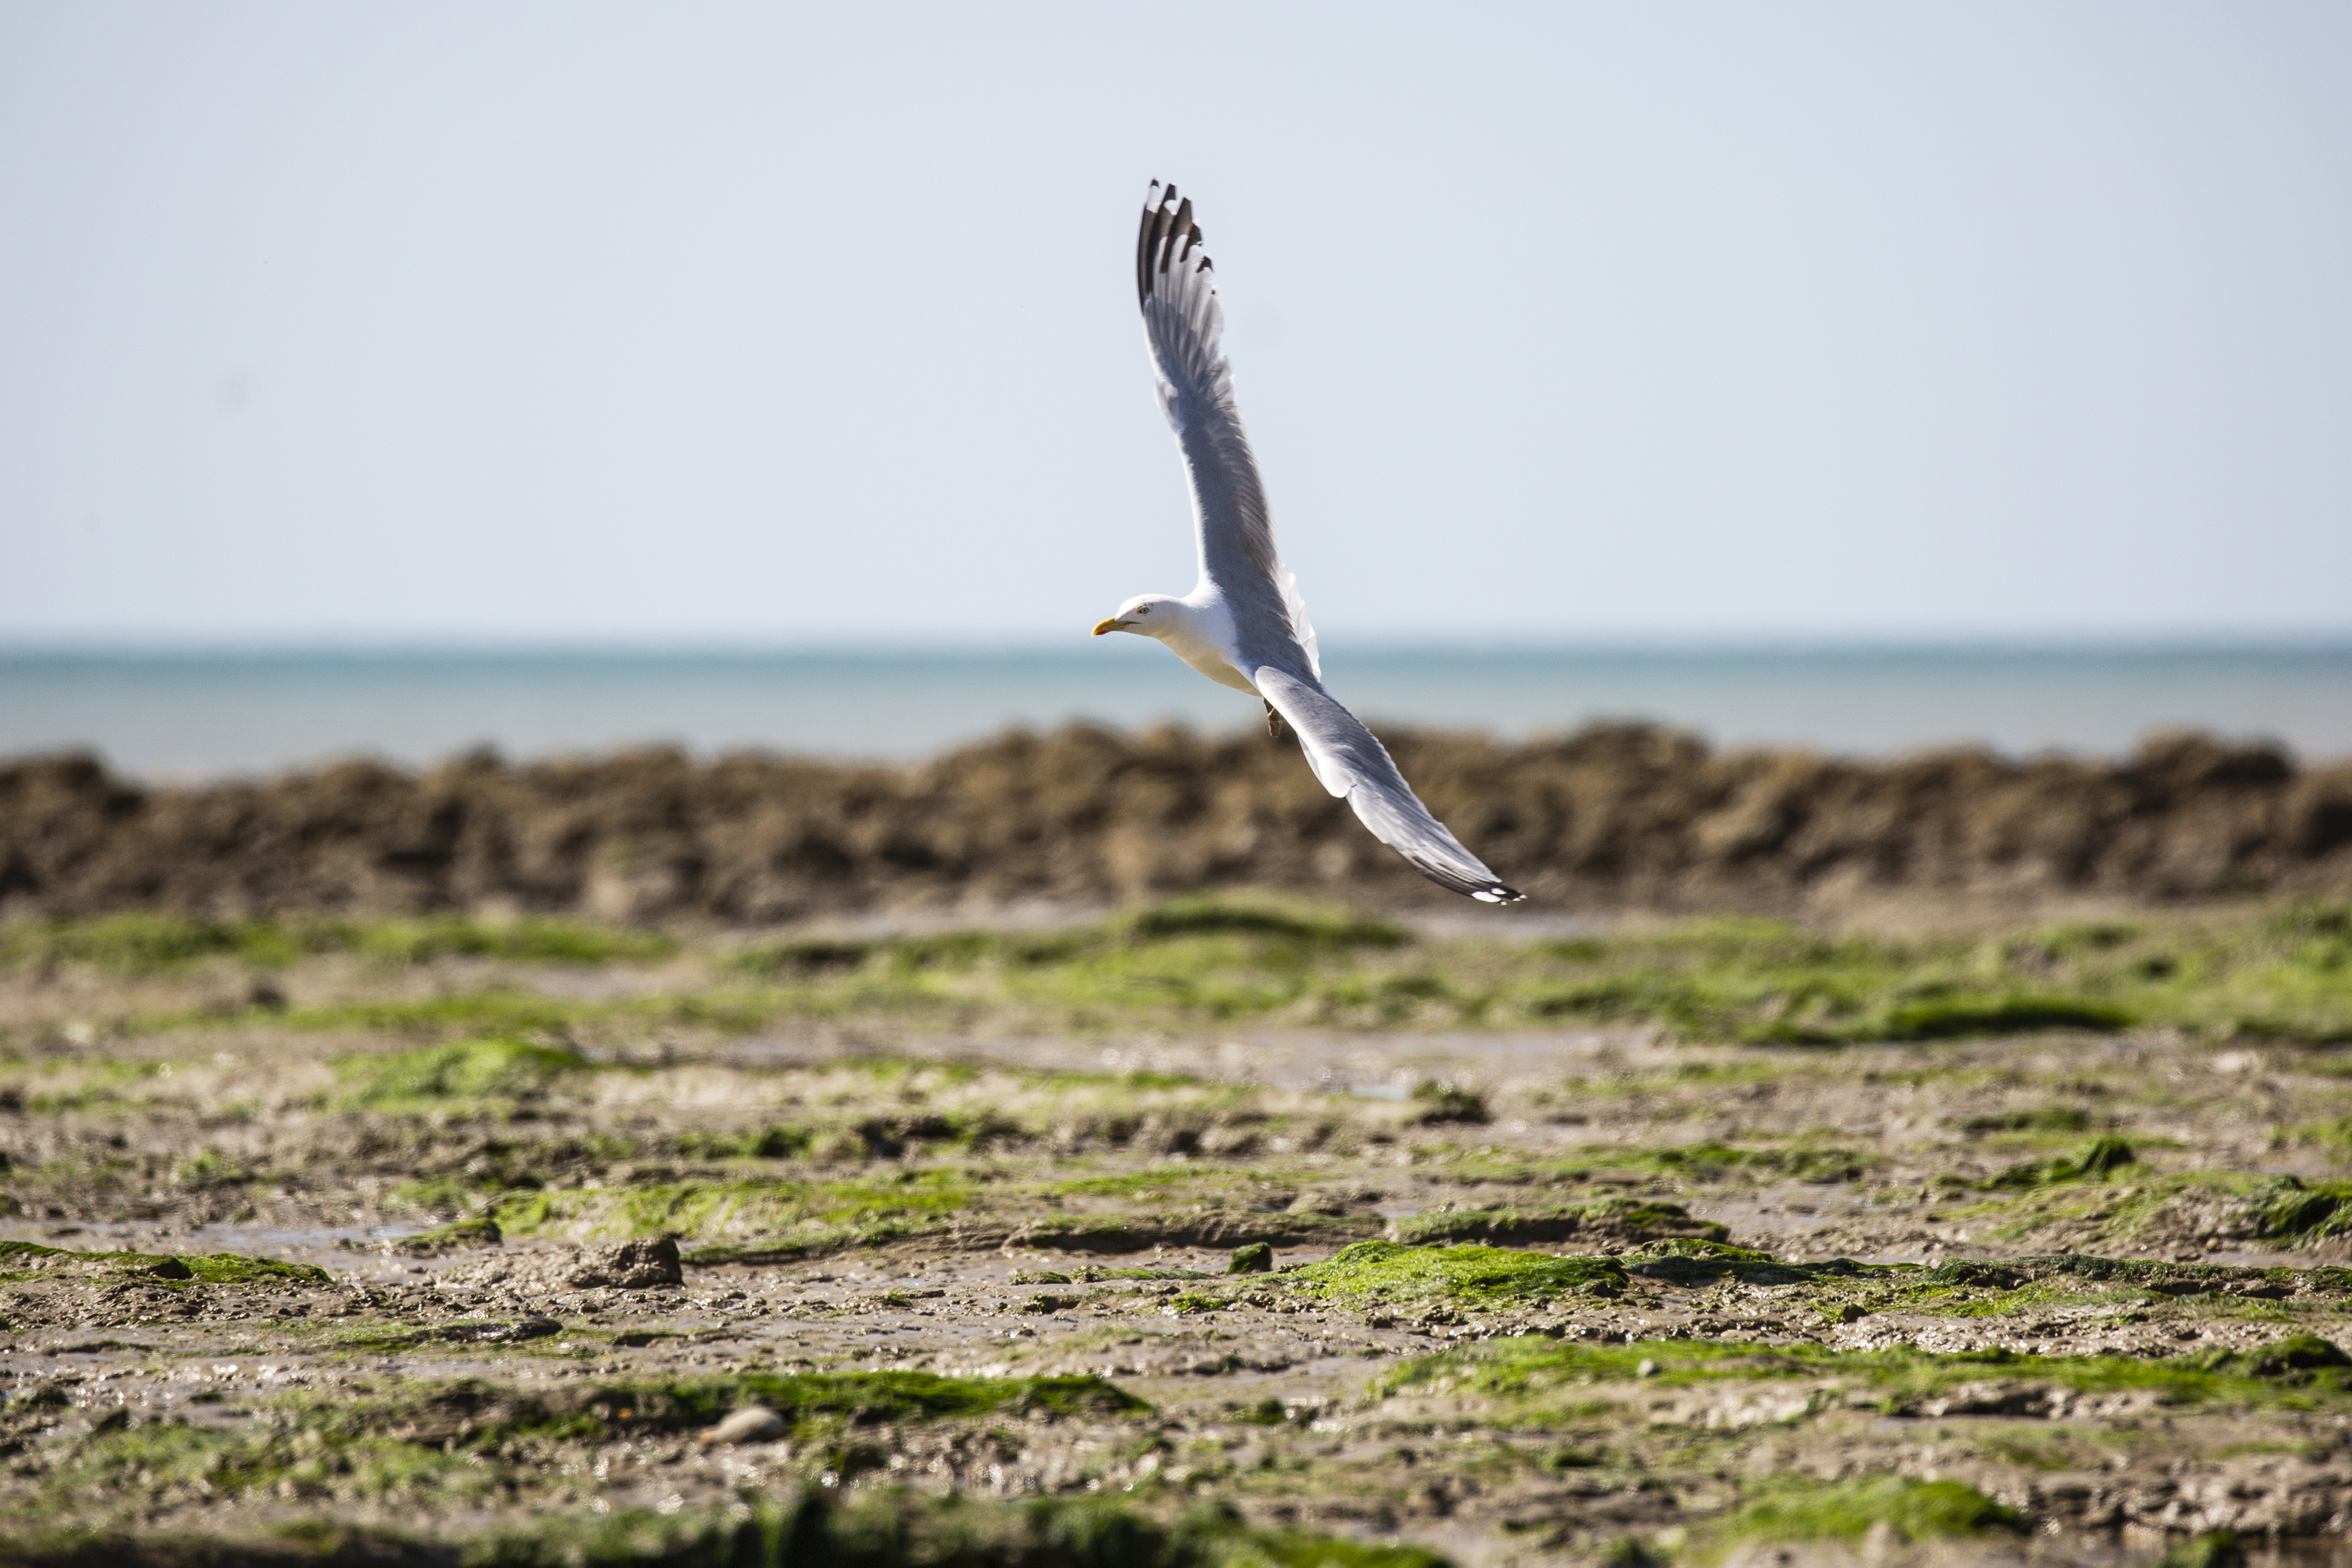 A gull flying above a beach